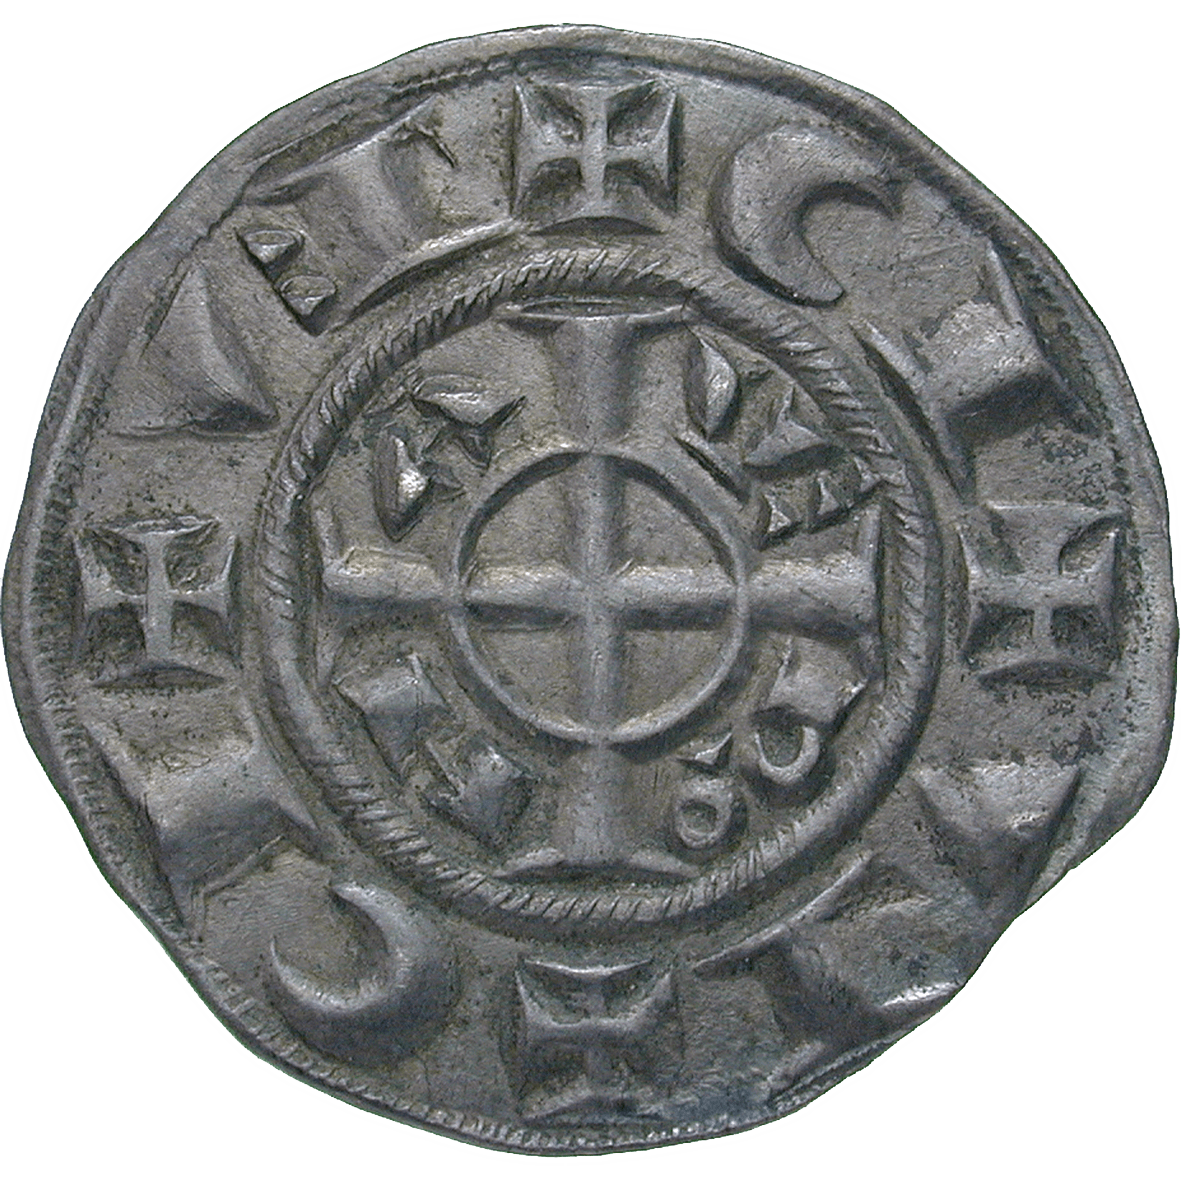 Holy Roman Empire, Republic of Verona, Frederick II of Hohenstaufen, Grosso worth 20 Denarii (reverse)